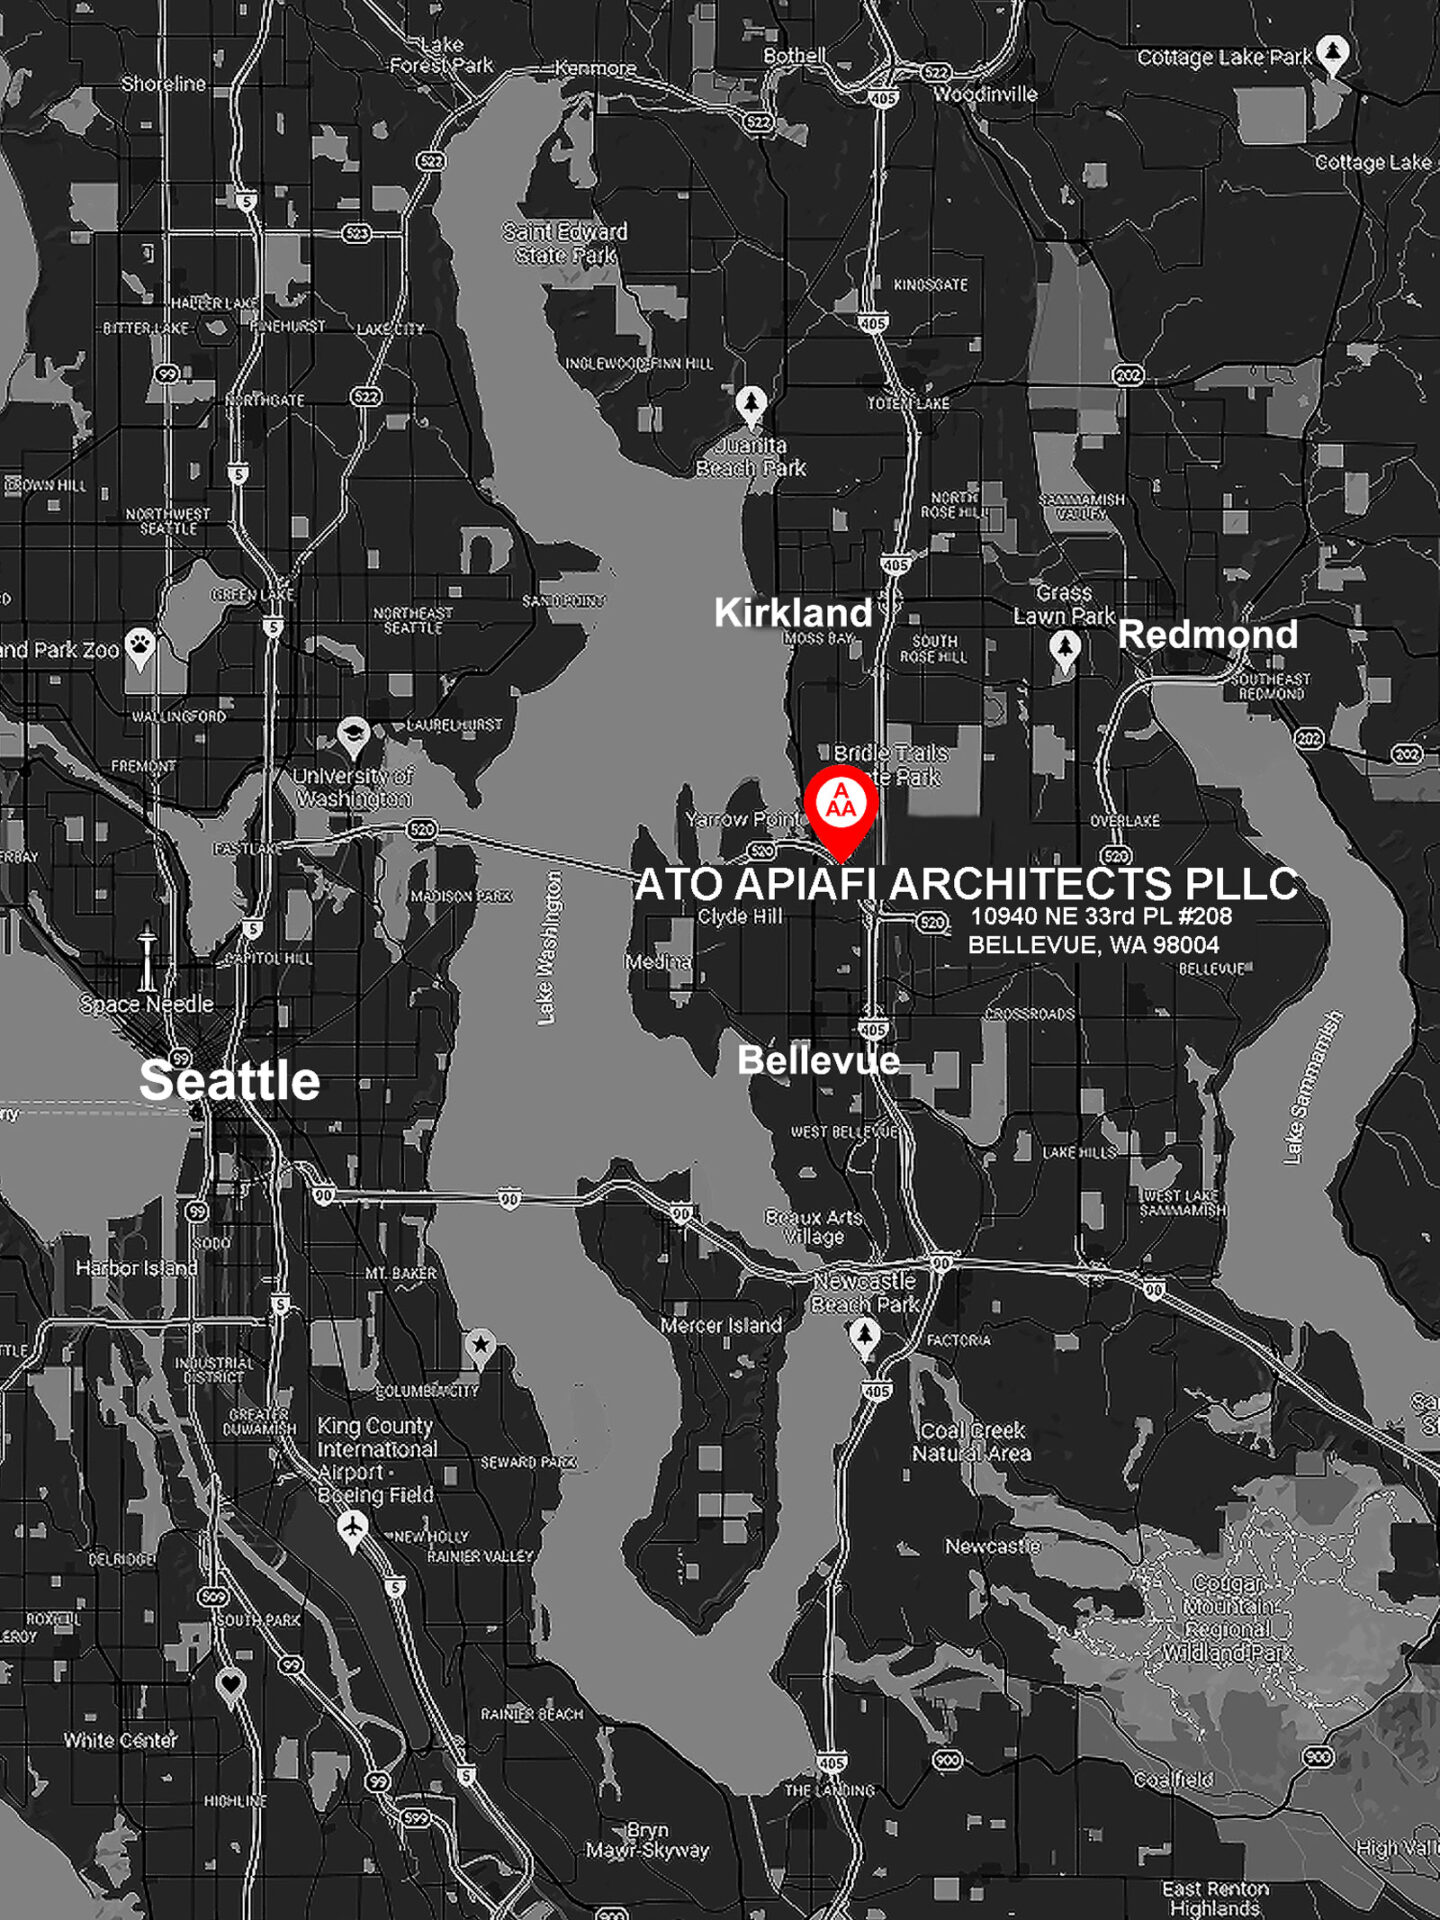 ato-apiafi-architects-pllc-location-map-6